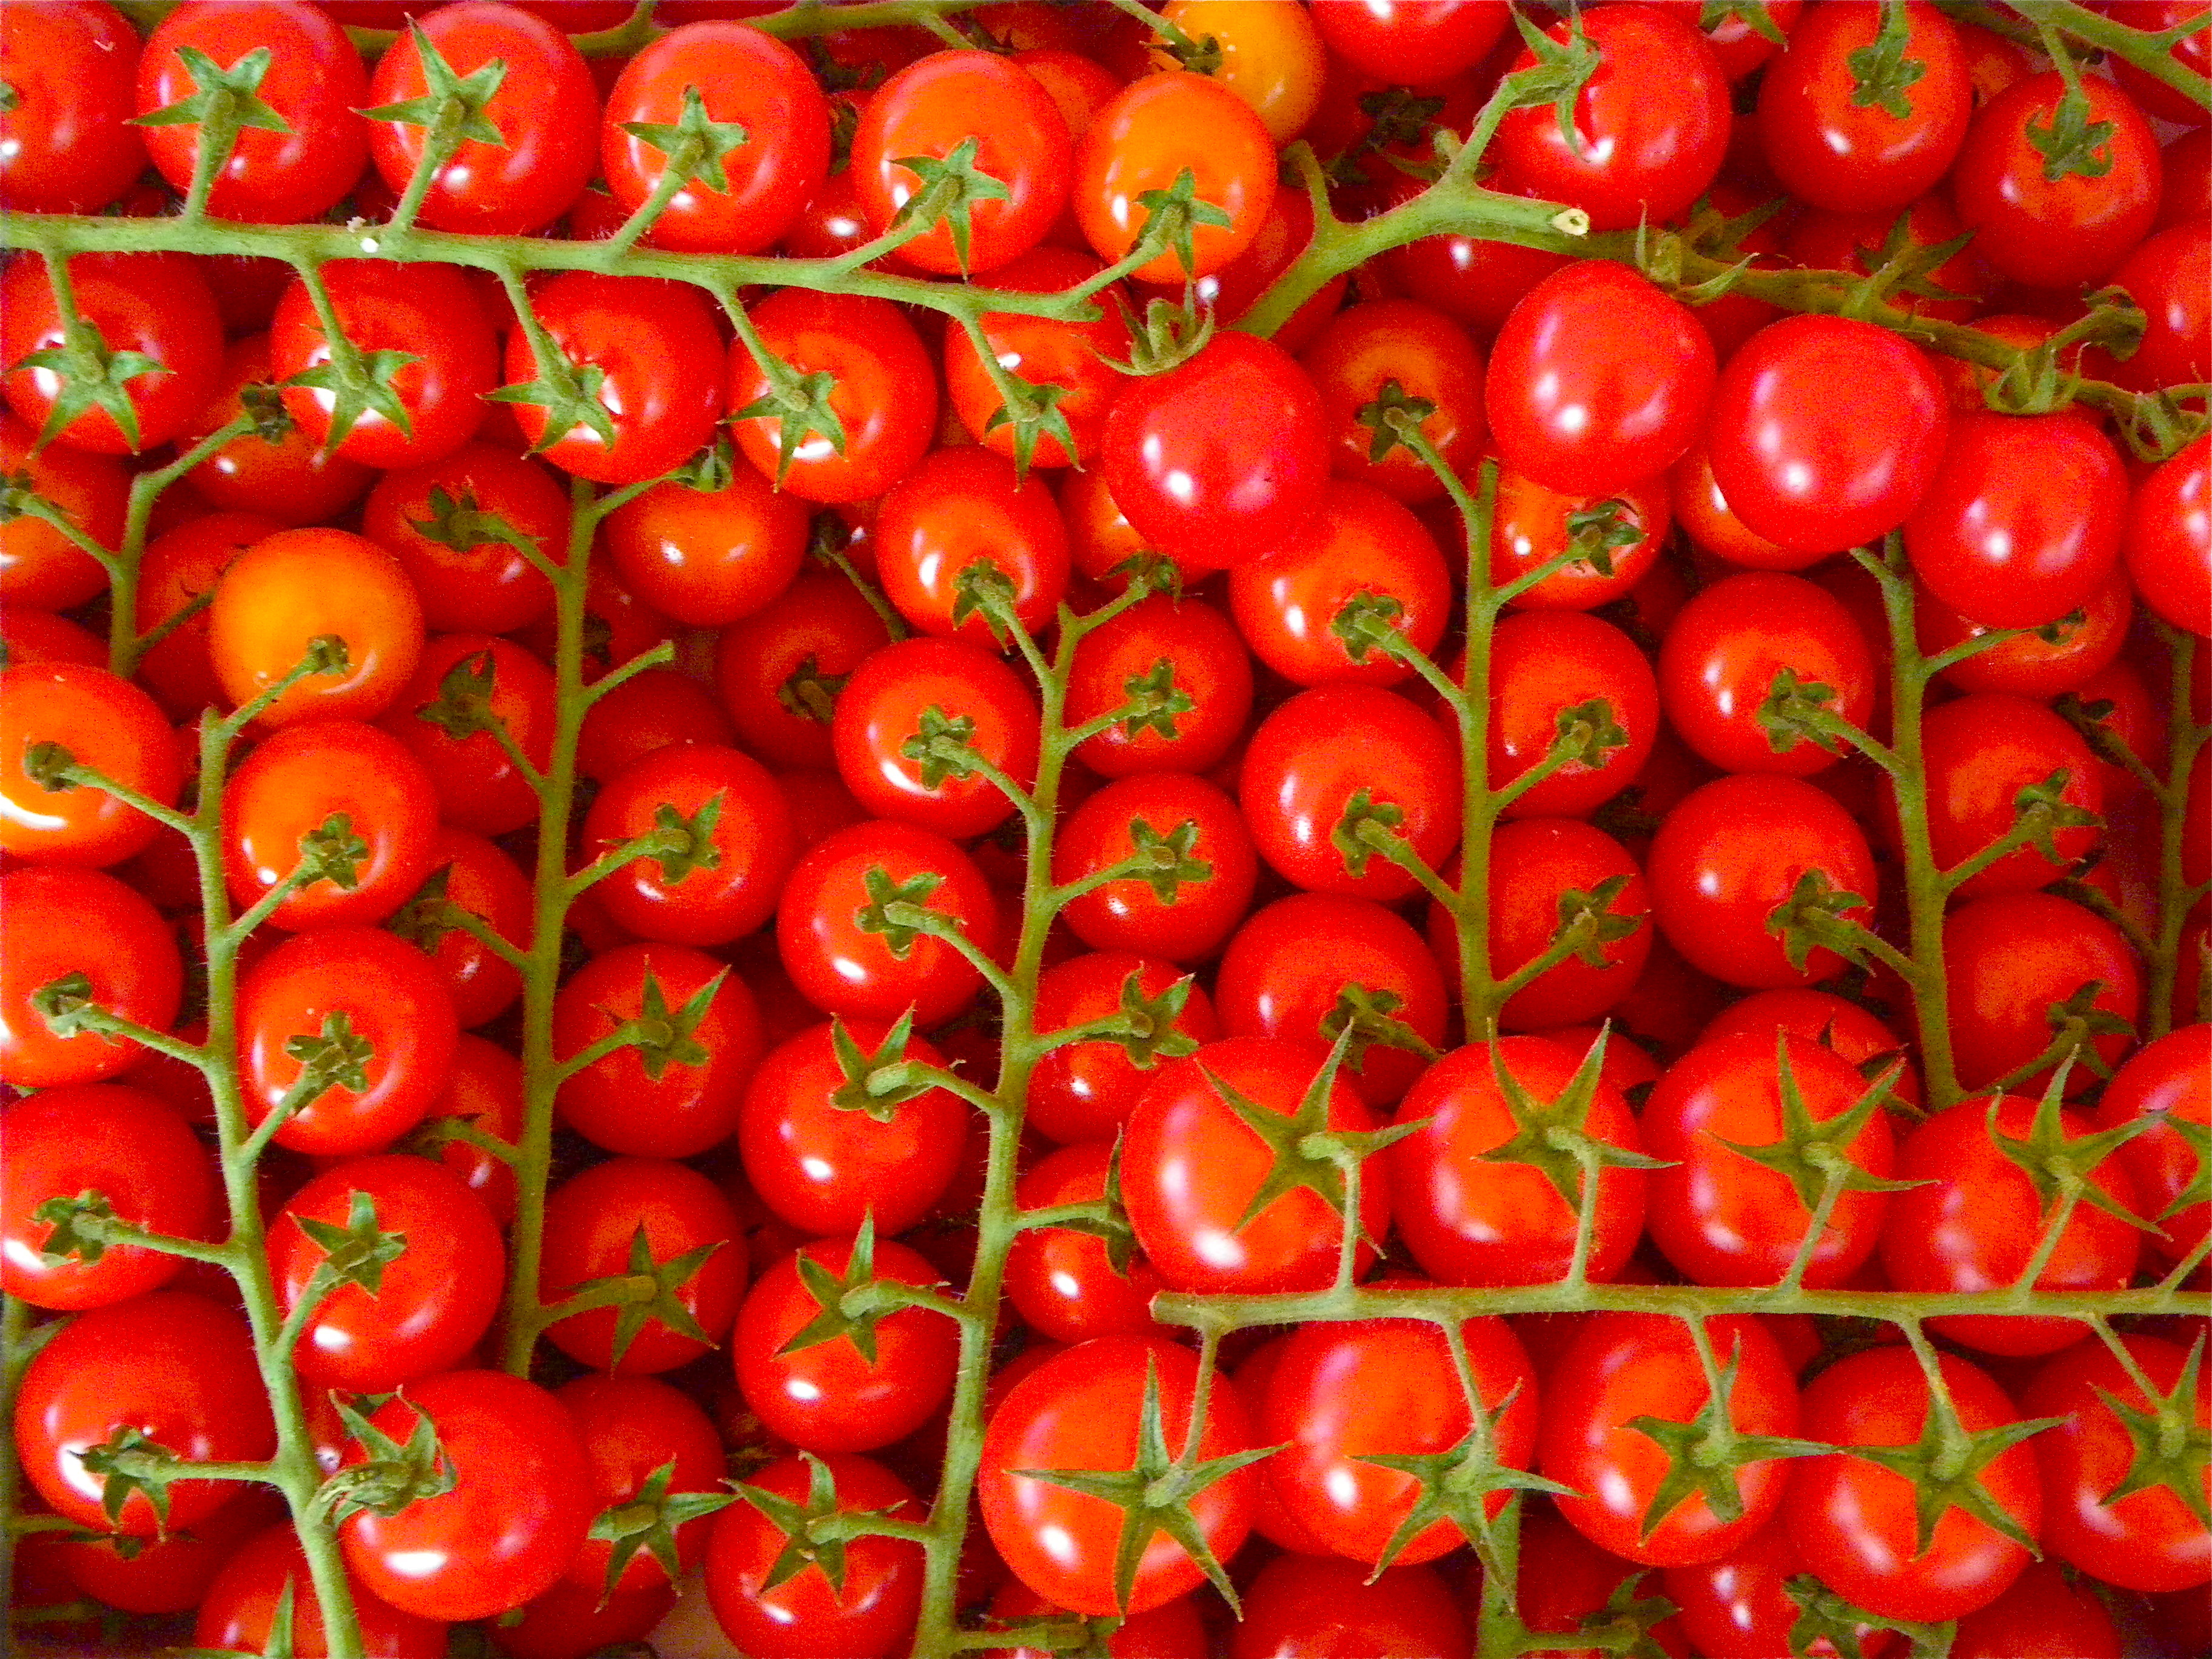 Truss tomatoes